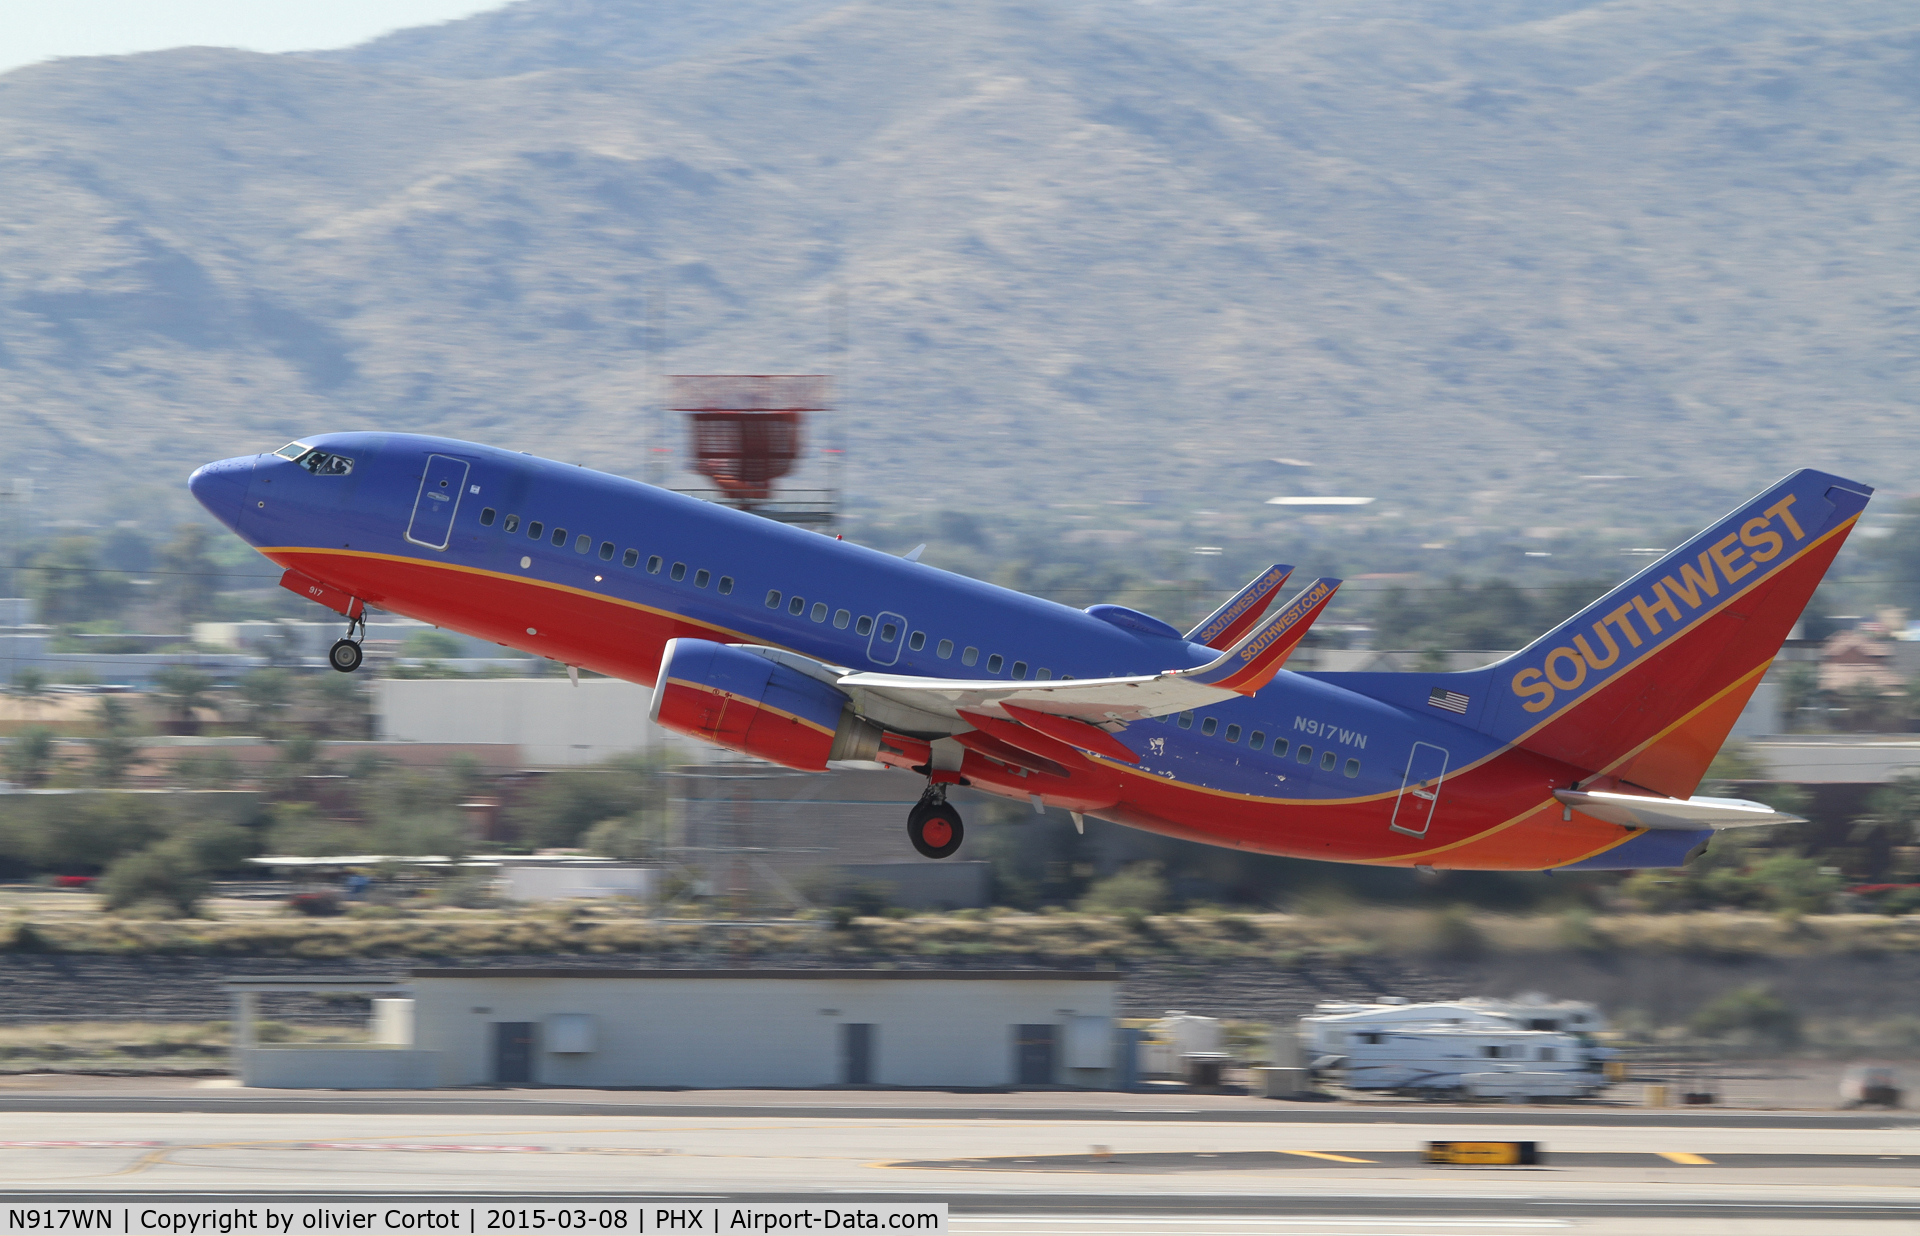 N917WN, 2008 Boeing 737-7H4 C/N 36624, taking off from Phoenix